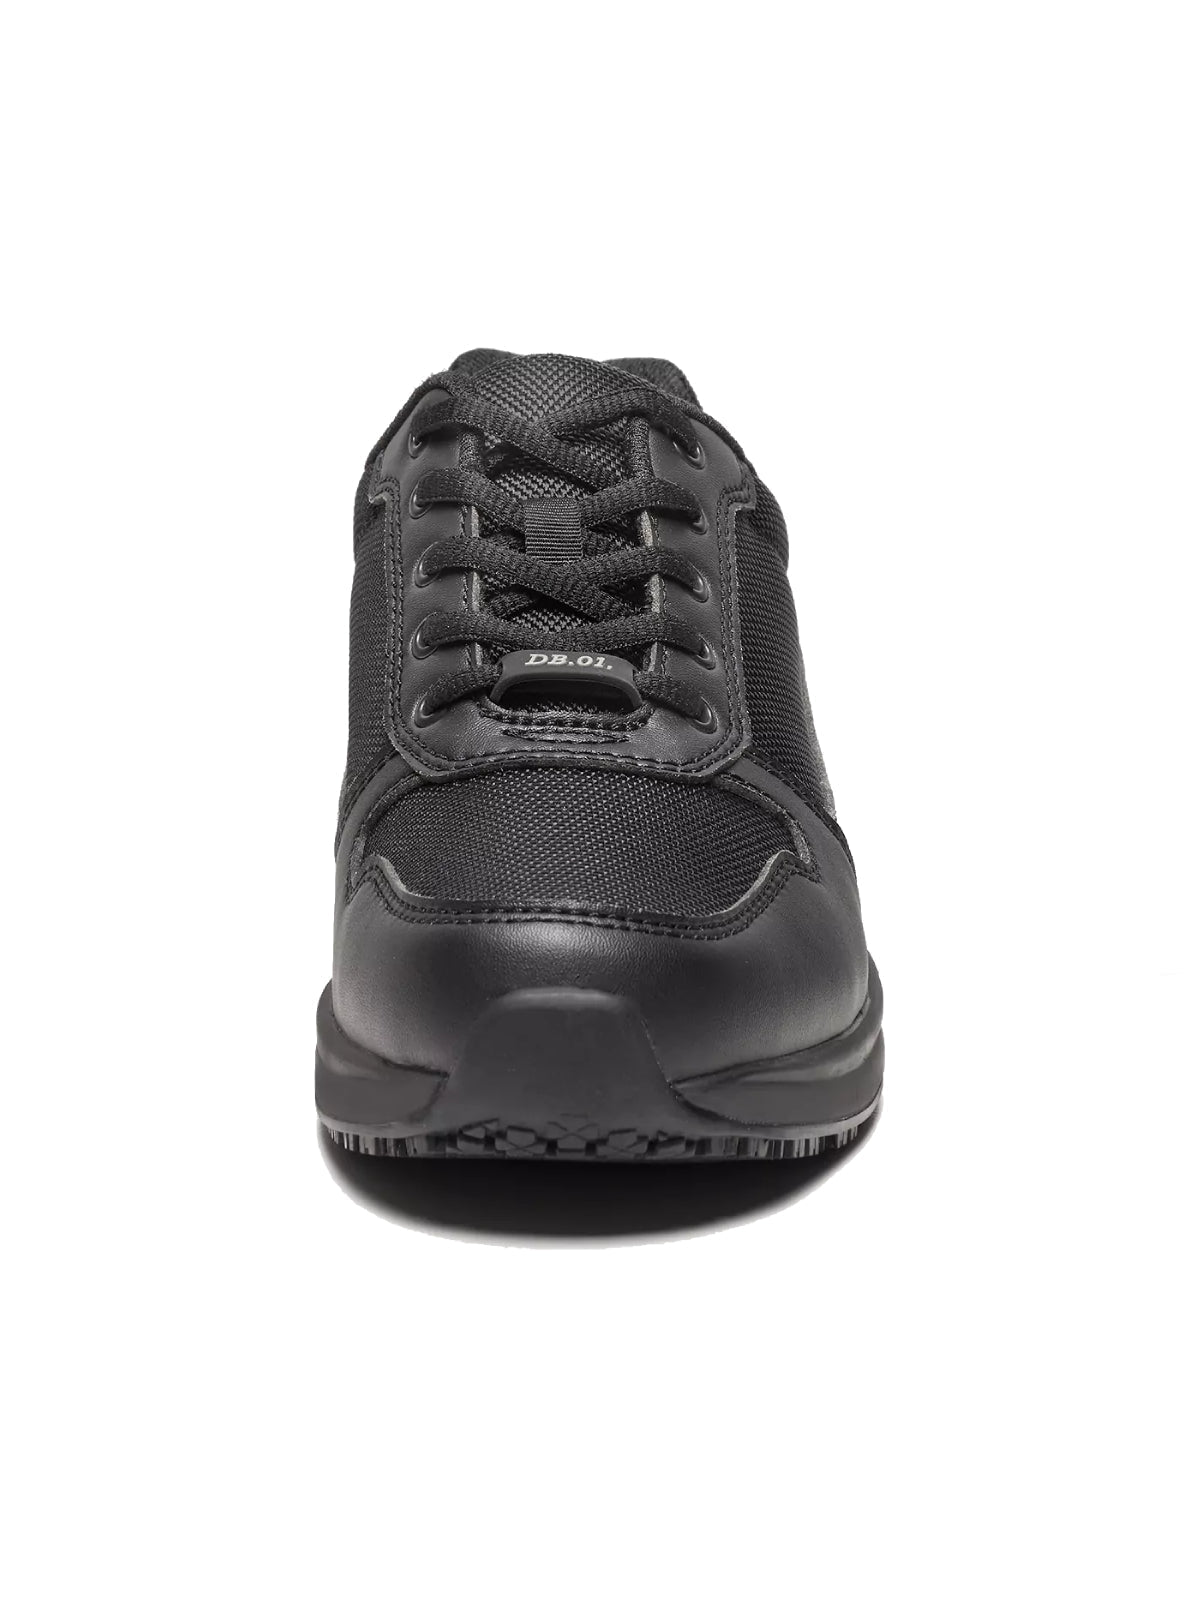 Work Sneaker DB.01 Black by New -  ChefsCotton